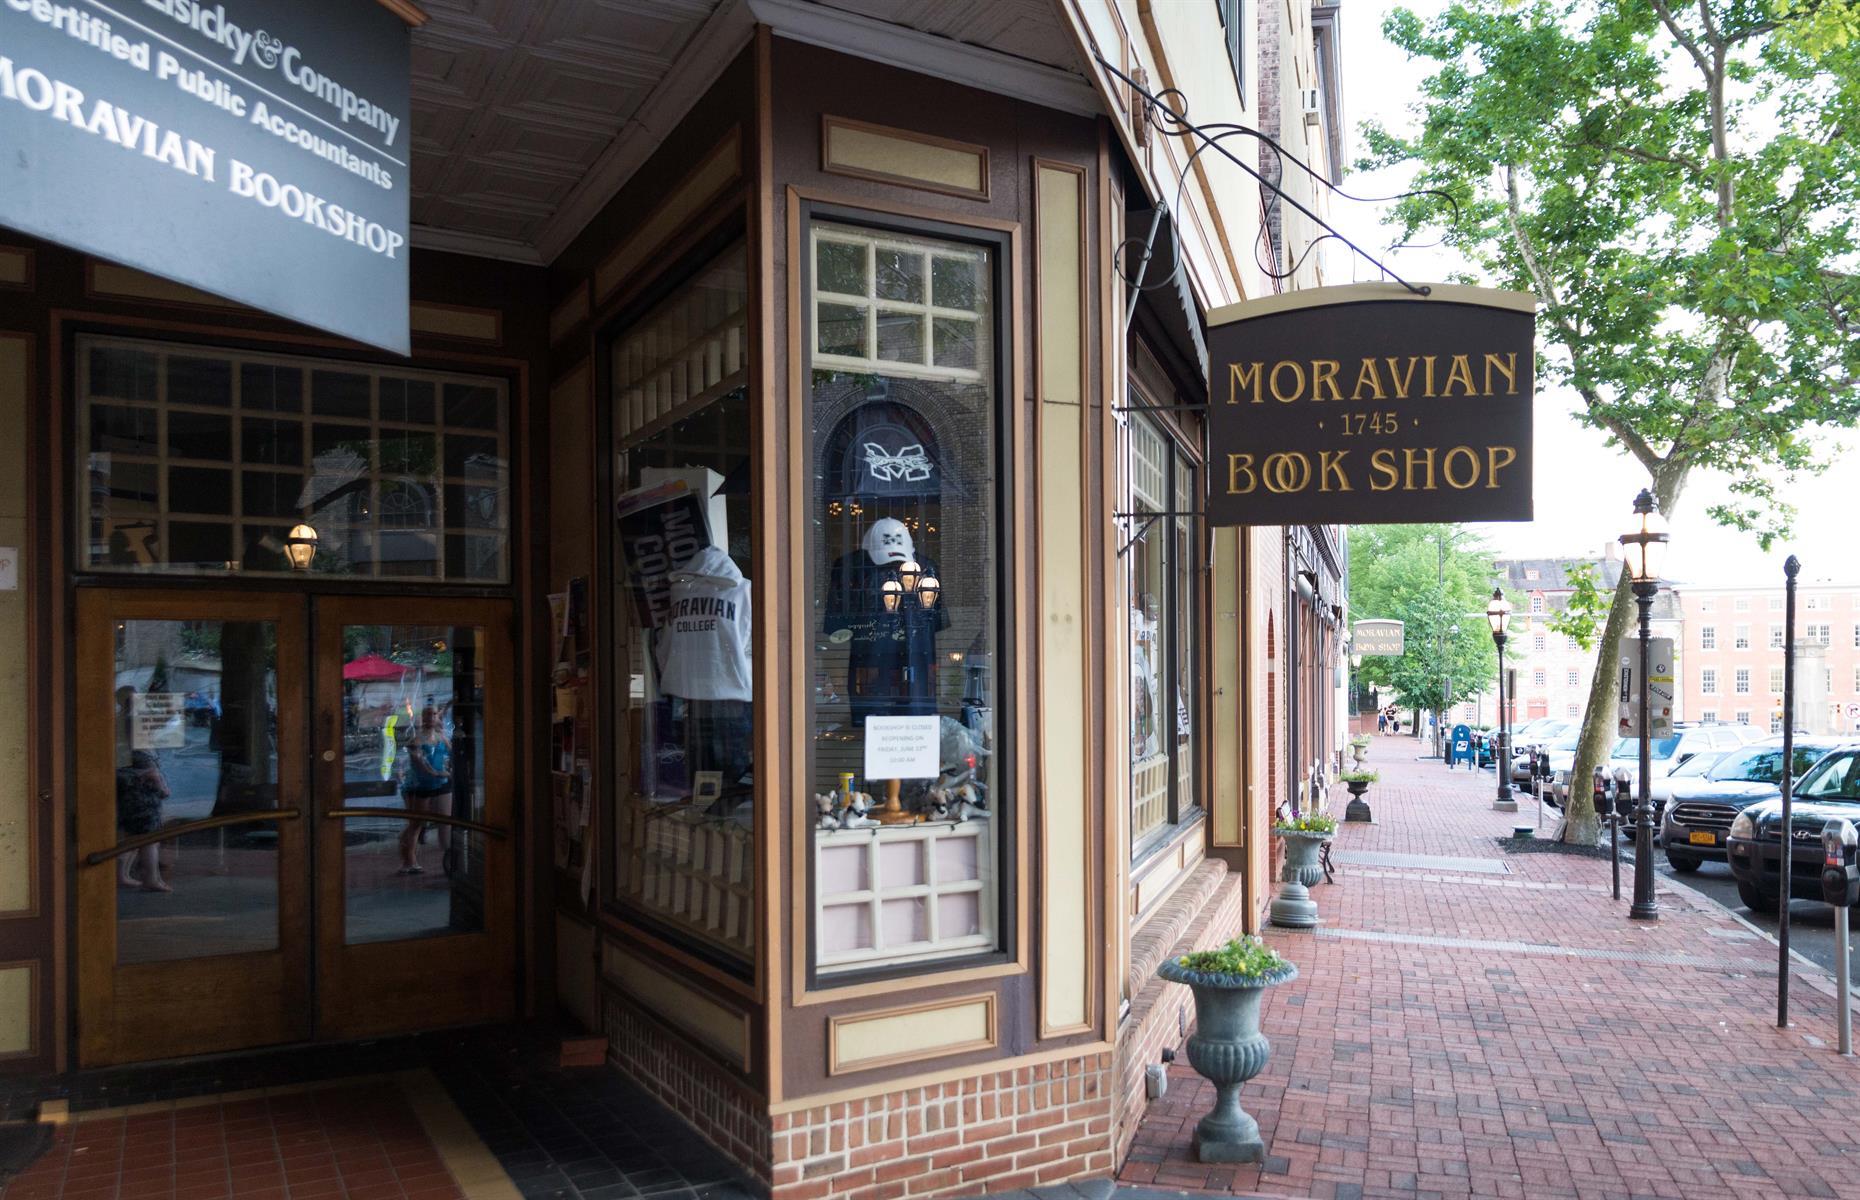 Moravian Book Shop, USA: est. 1745